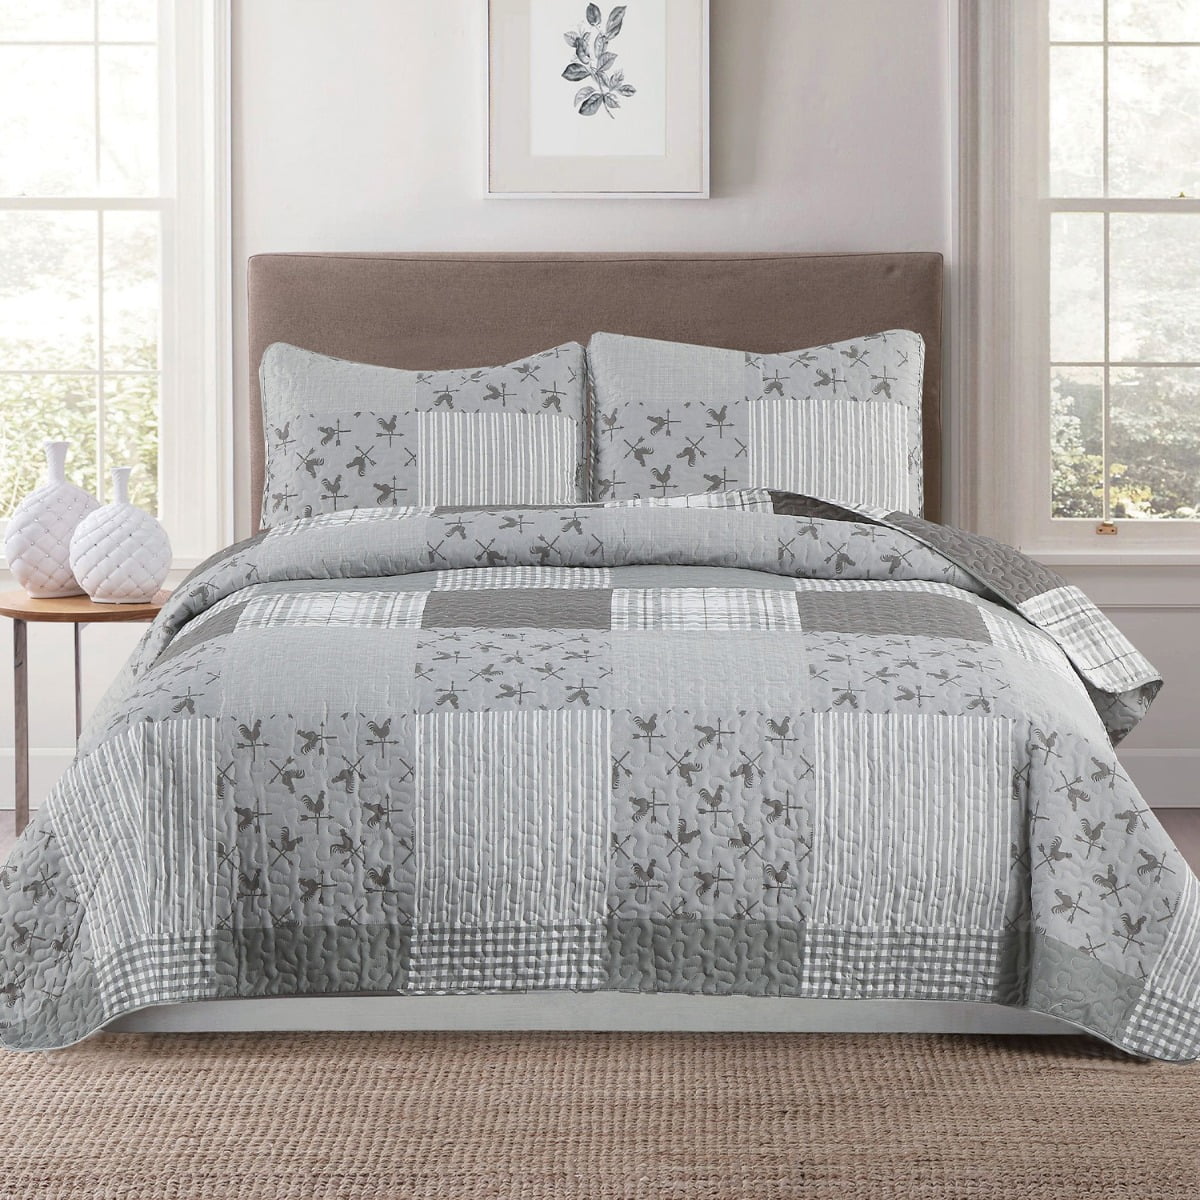 Queen Quilt 3 Piece Bedspread with 2 pillow sham Coverlet Set 